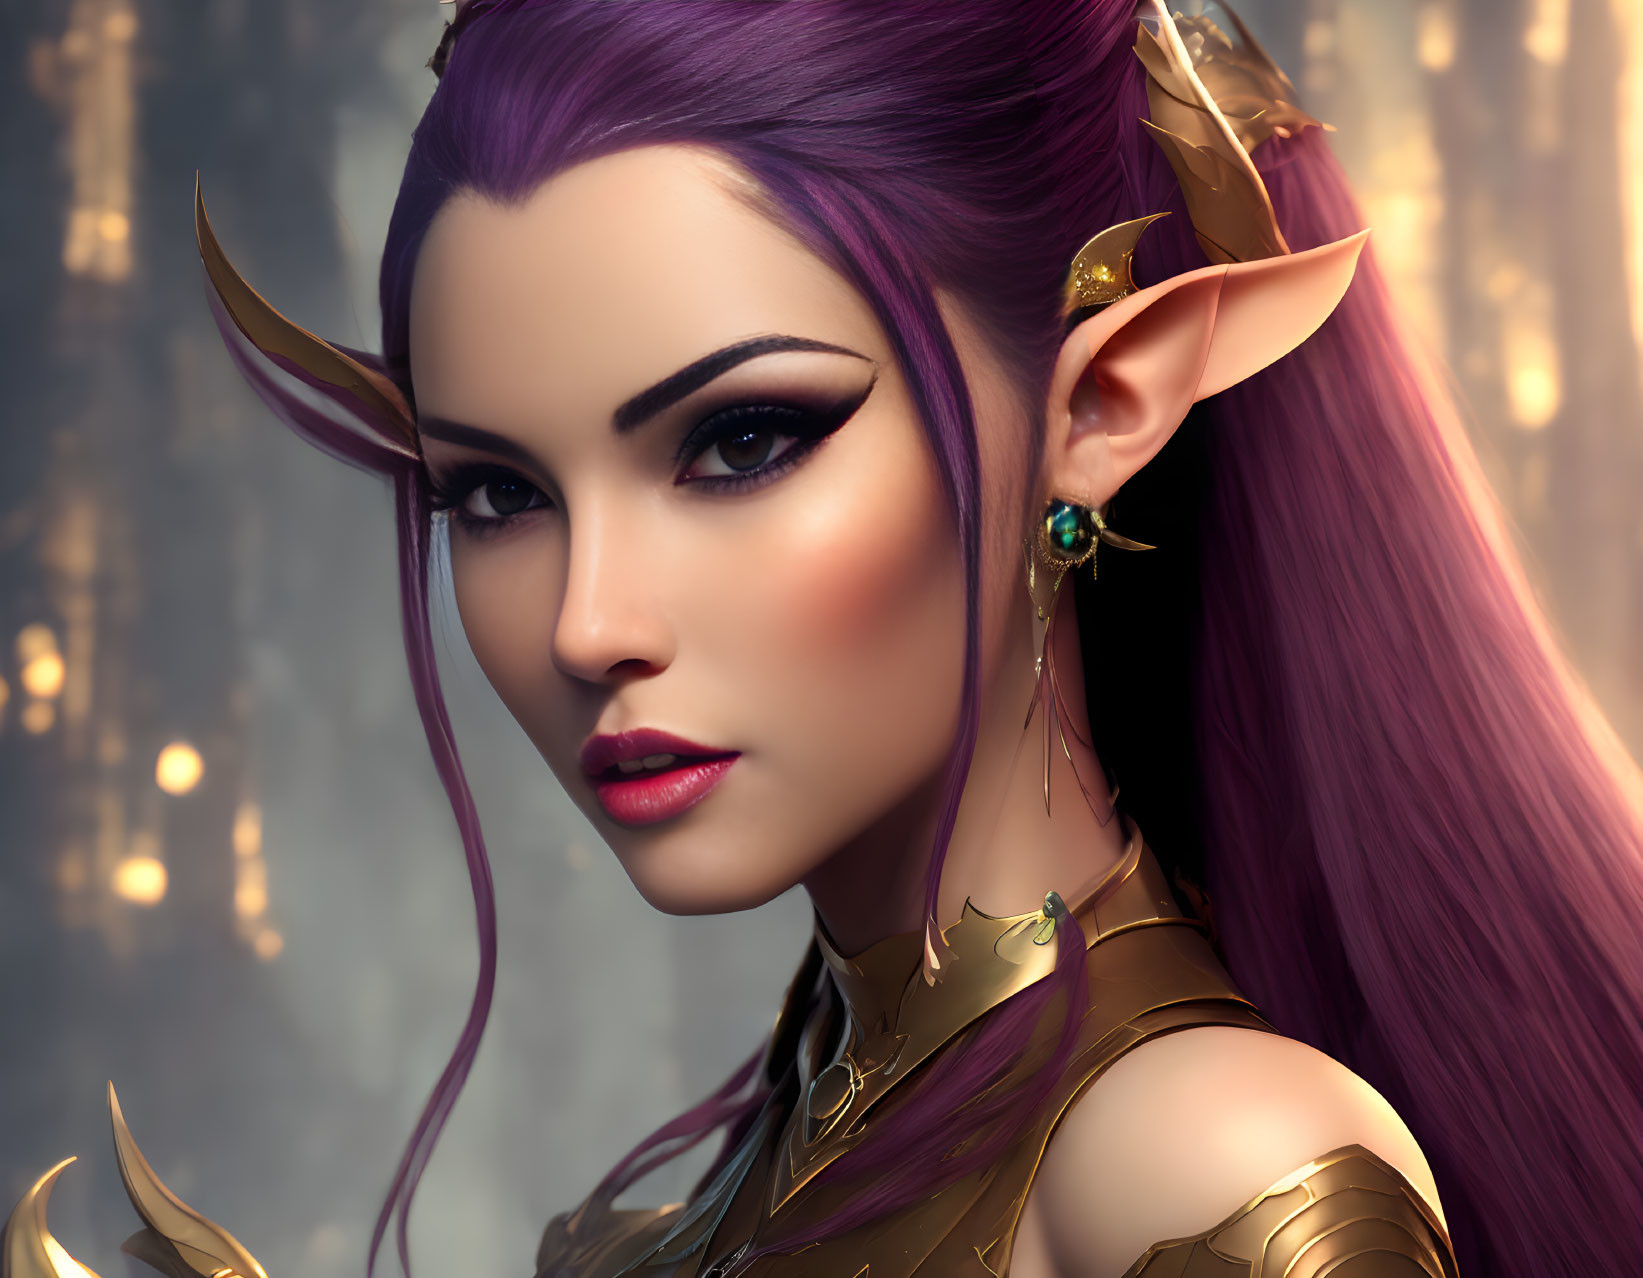 Fantasy digital art: Elegant elf female with purple hair and gold jewelry